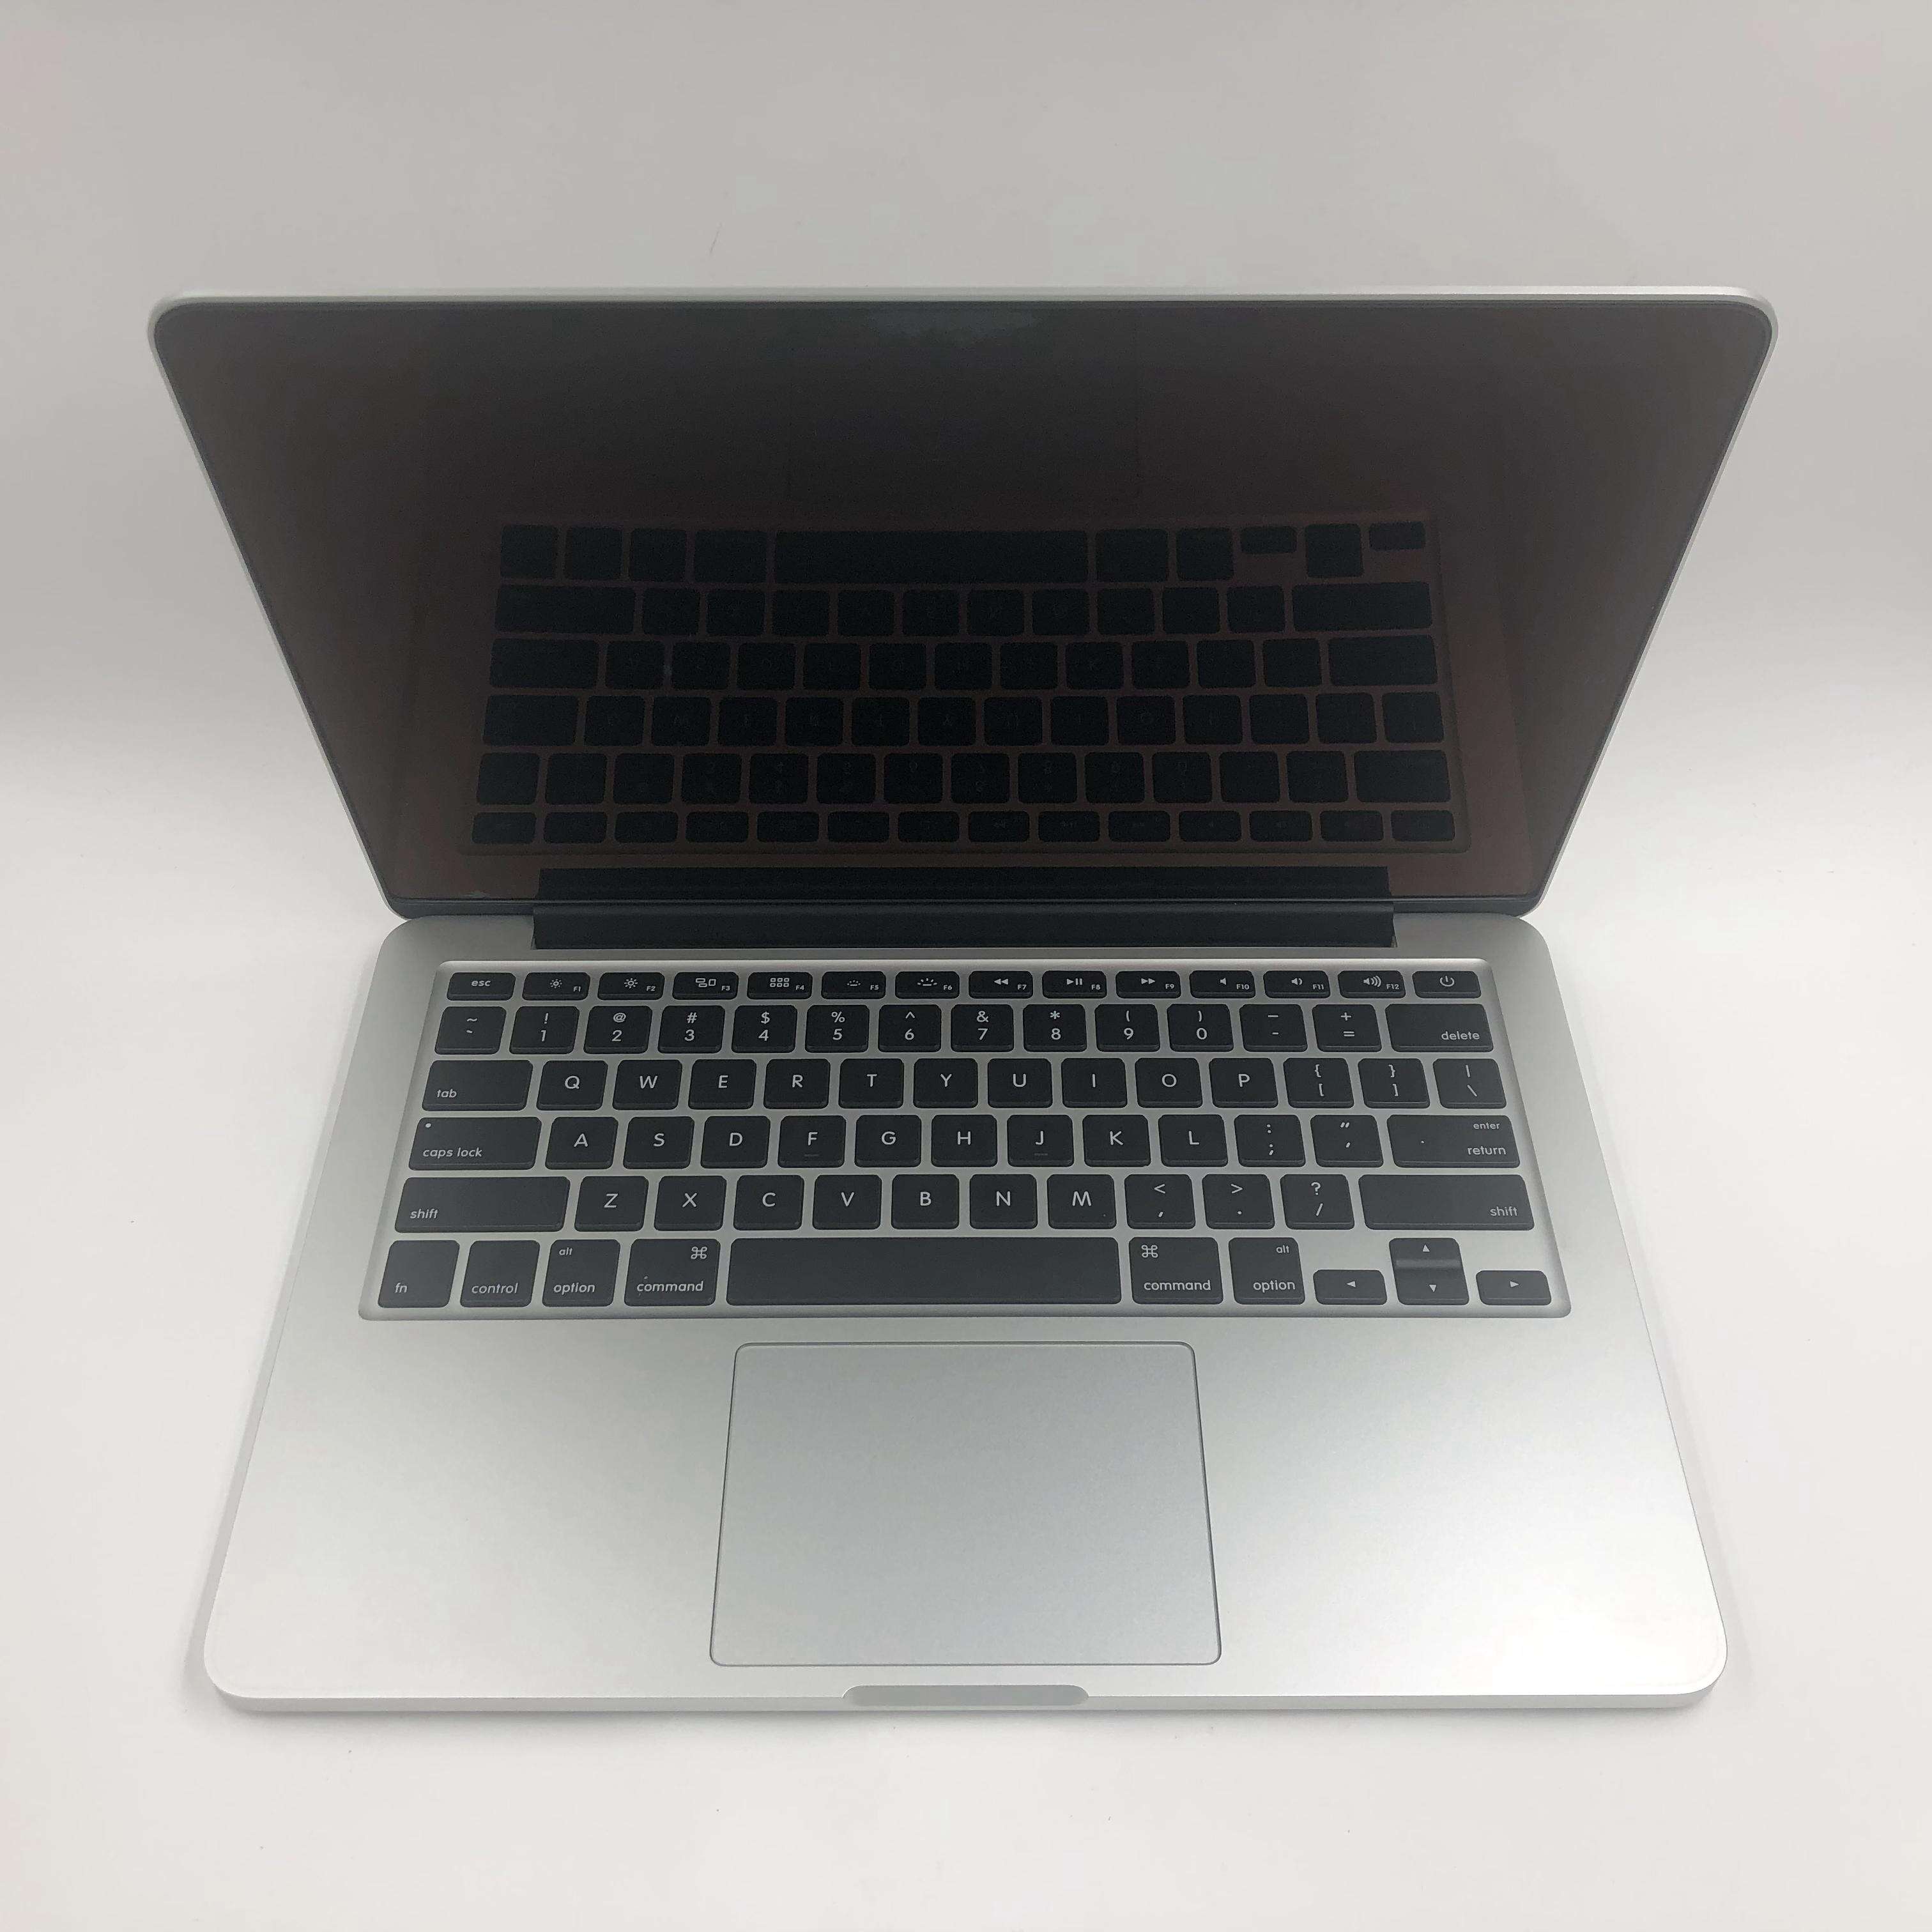 MacBook Pro (13",2015)  内存_8G/CPU_2.7GHz Intel Core i5/硬盘_256G|国行|银色